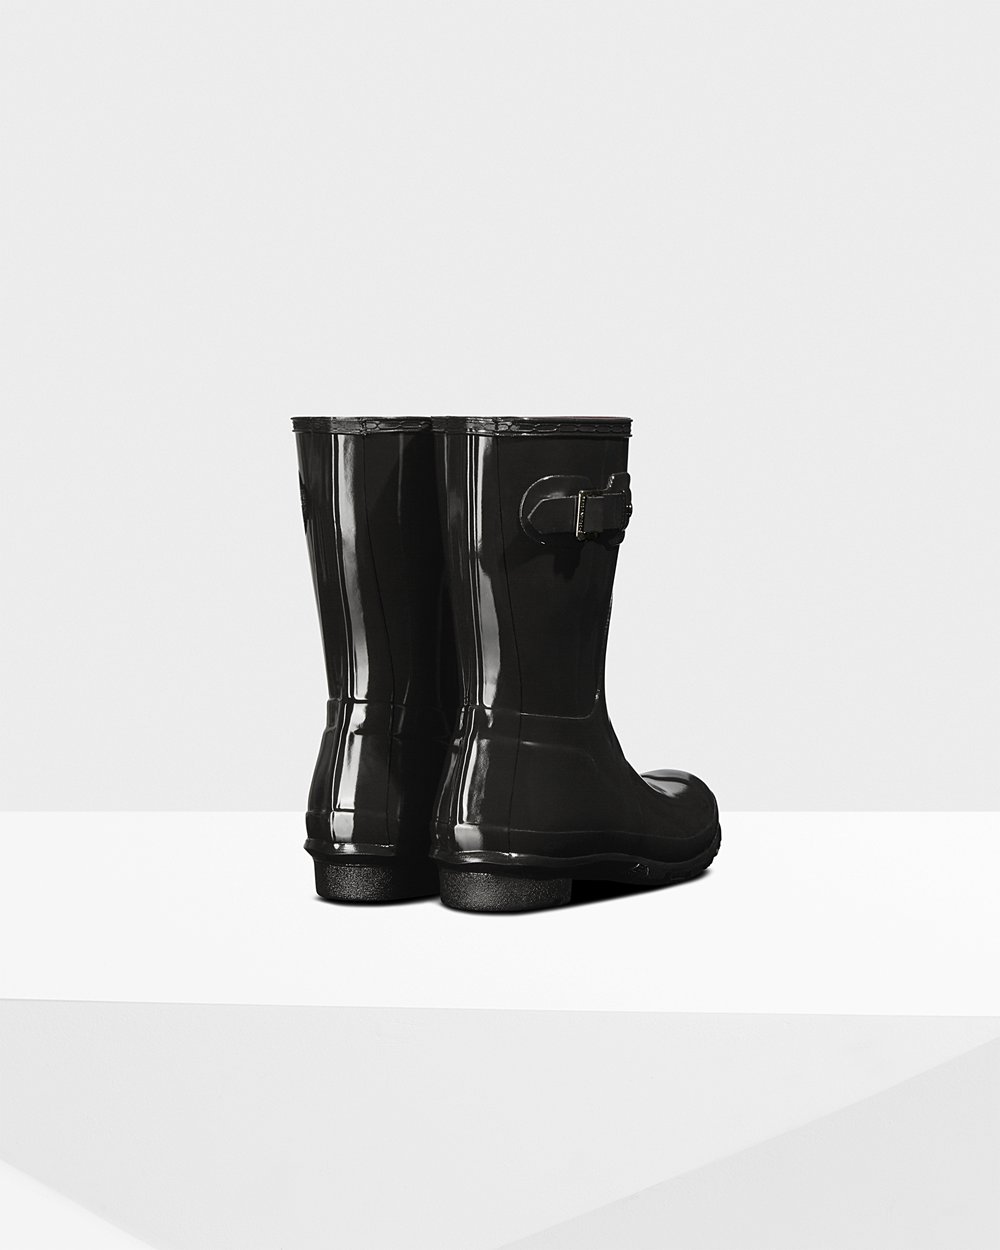 Womens Short Rain Boots - Hunter Original Gloss (27JQSWNHD) - Black